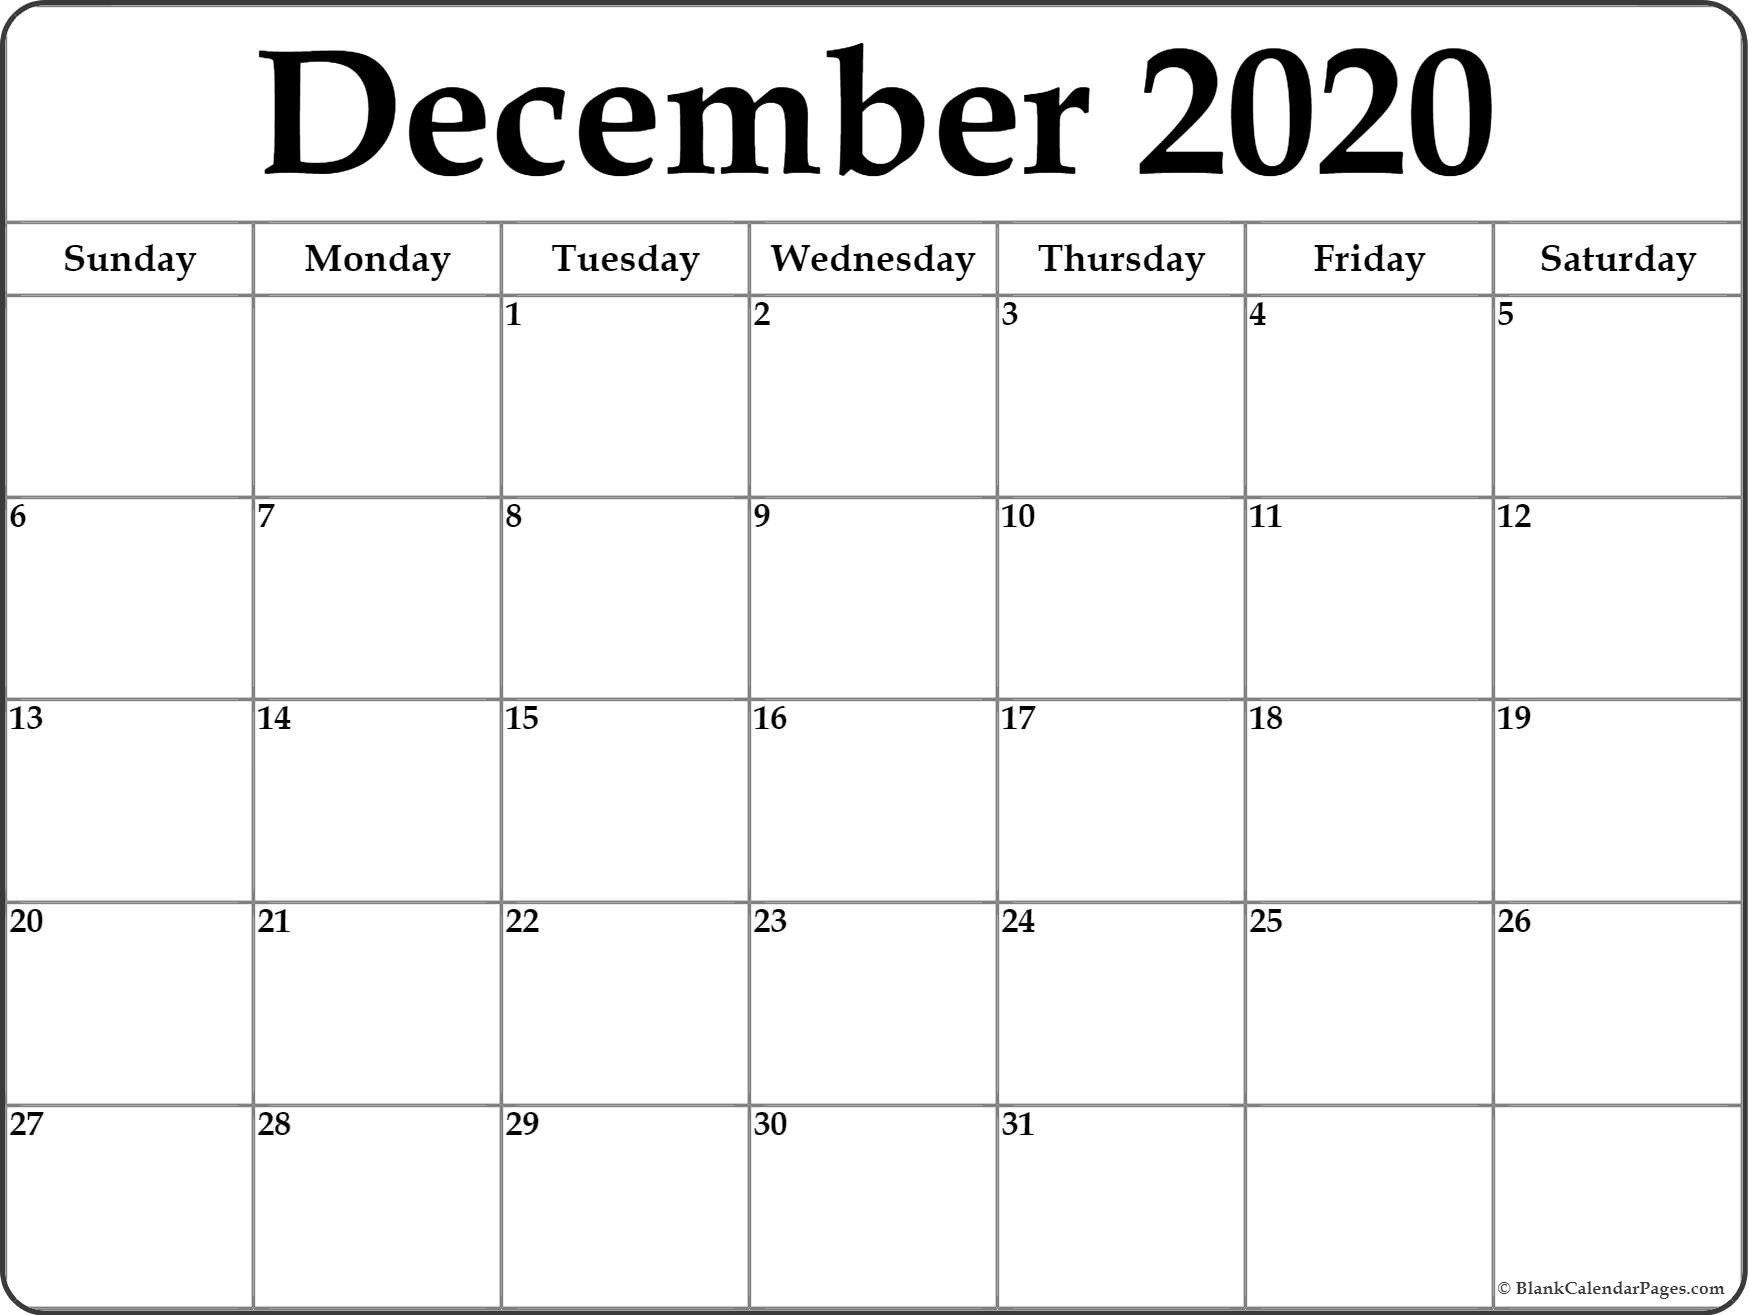 December 2020 Calendar | Free Printable Monthly Calendars-Printable Monthly Calendar 2020 To Pay Monthly Bills